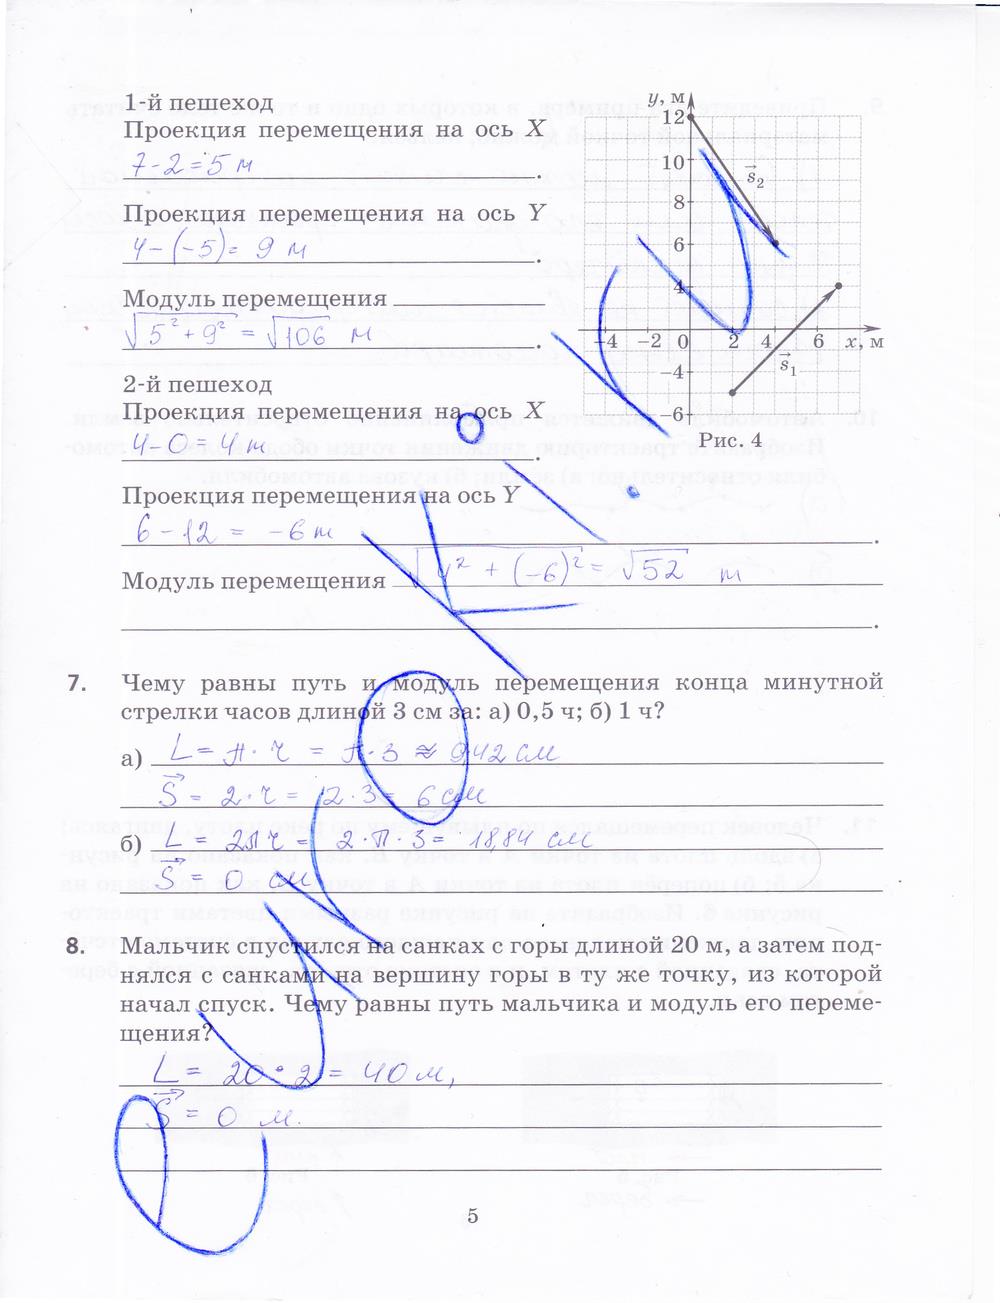 гдз 9 класс рабочая тетрадь страница 5 физика Пурышева, Важеевская, Чаругин